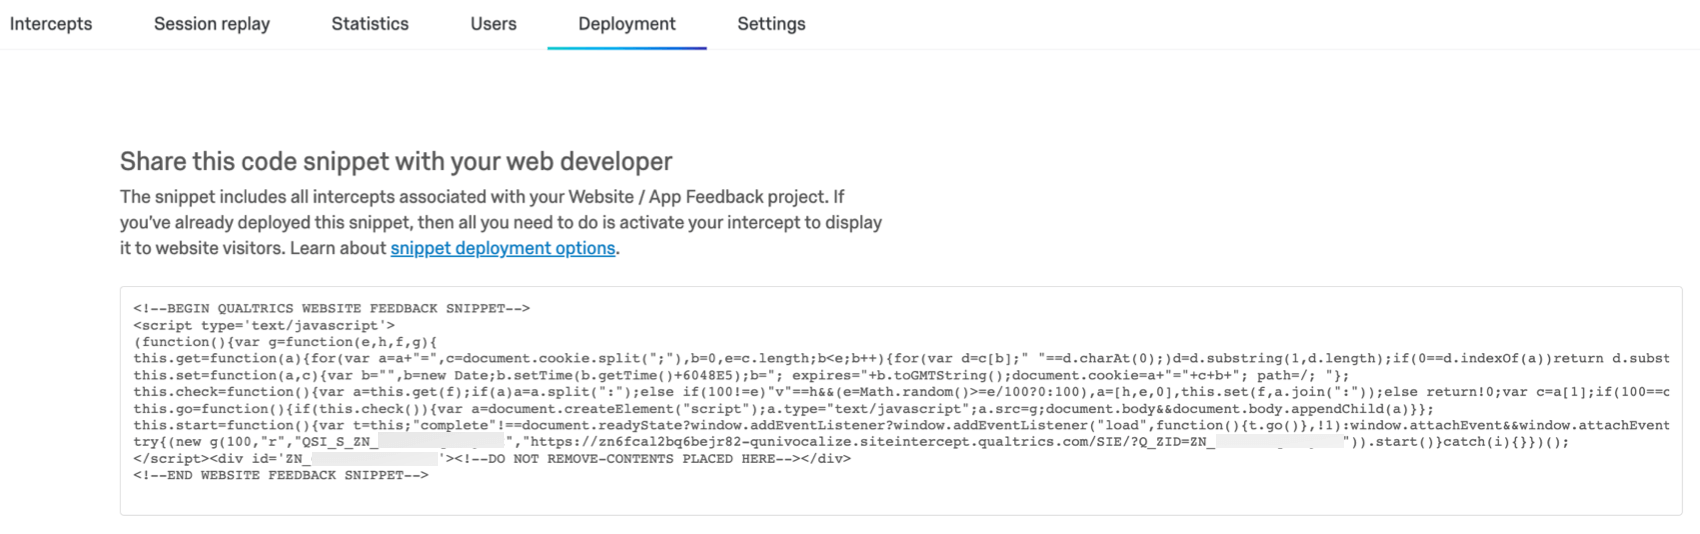 Feedback ~ Settings UI - Creations Feedback - Developer Forum